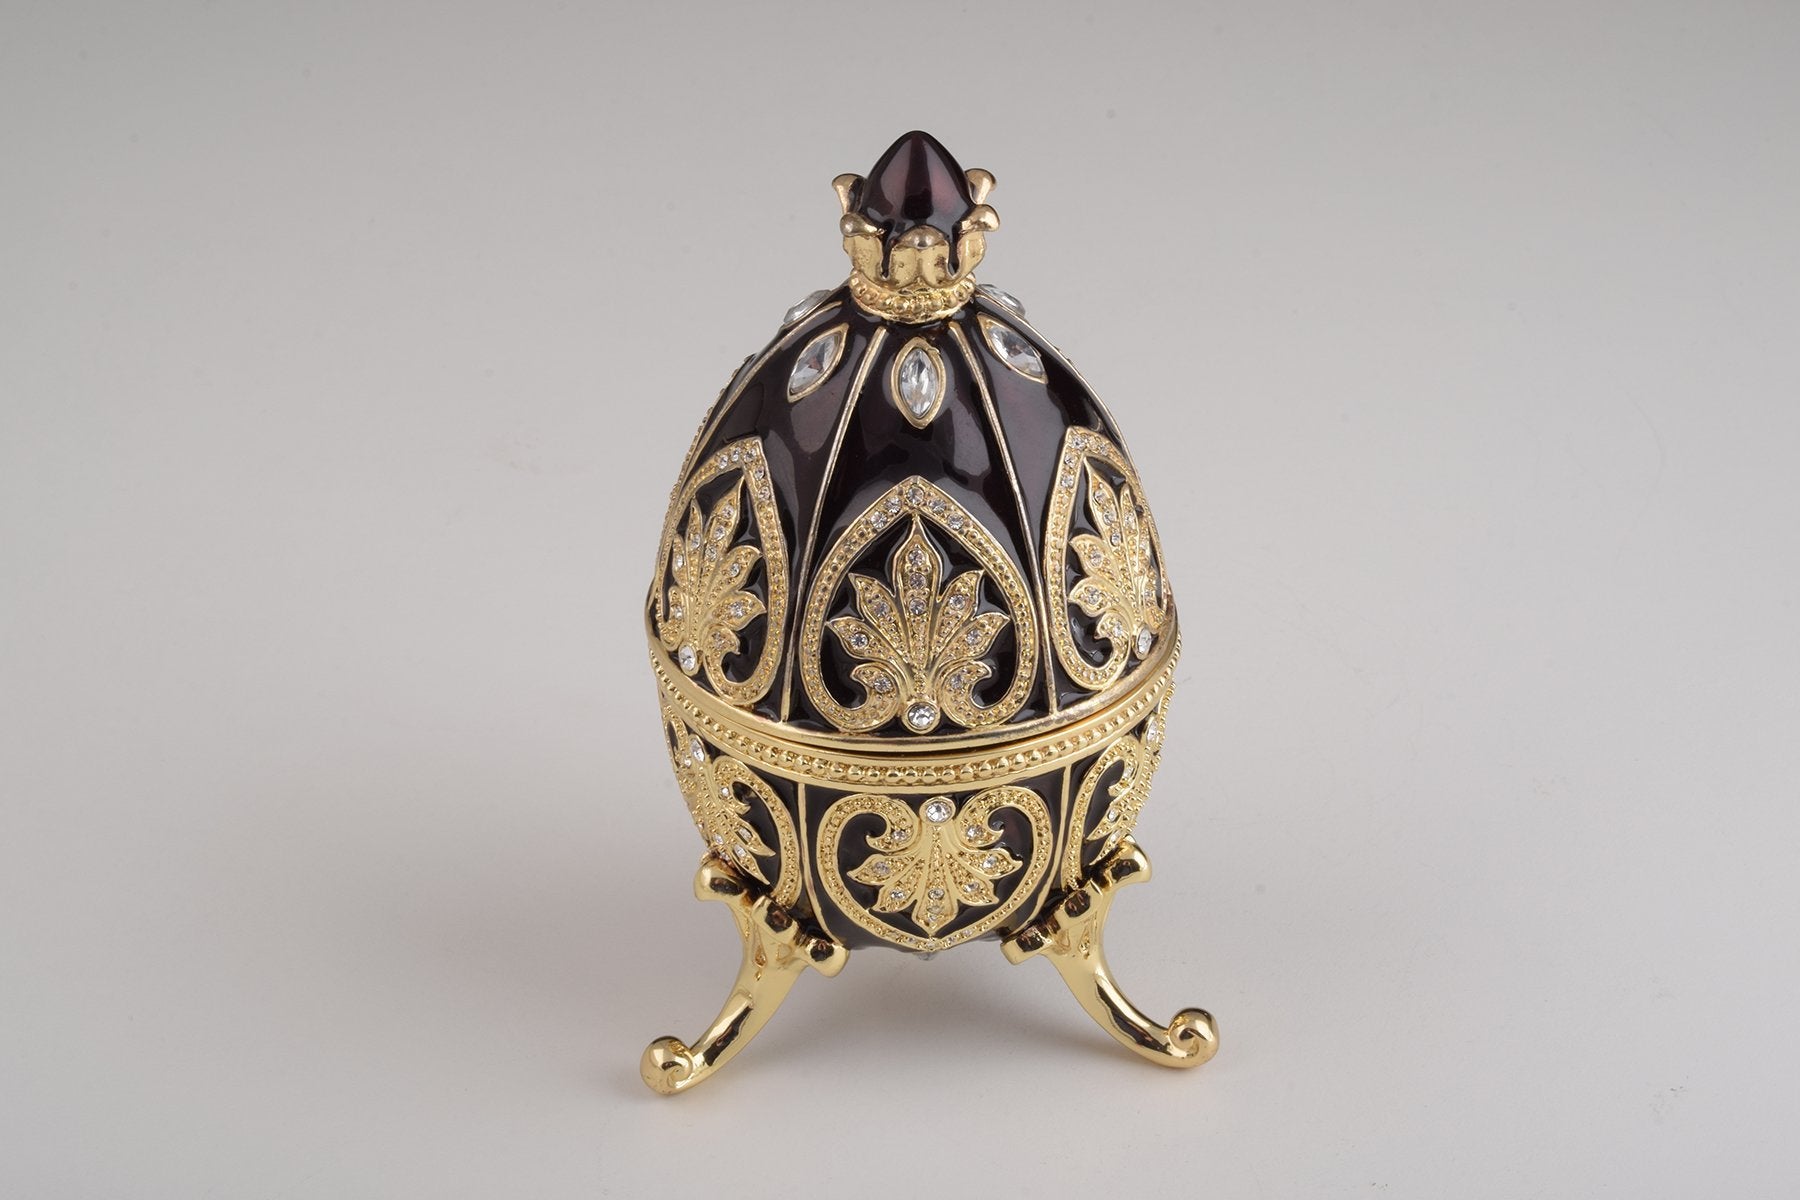 Keren Kopal Gold & Black Faberge Egg with Clock  124.00